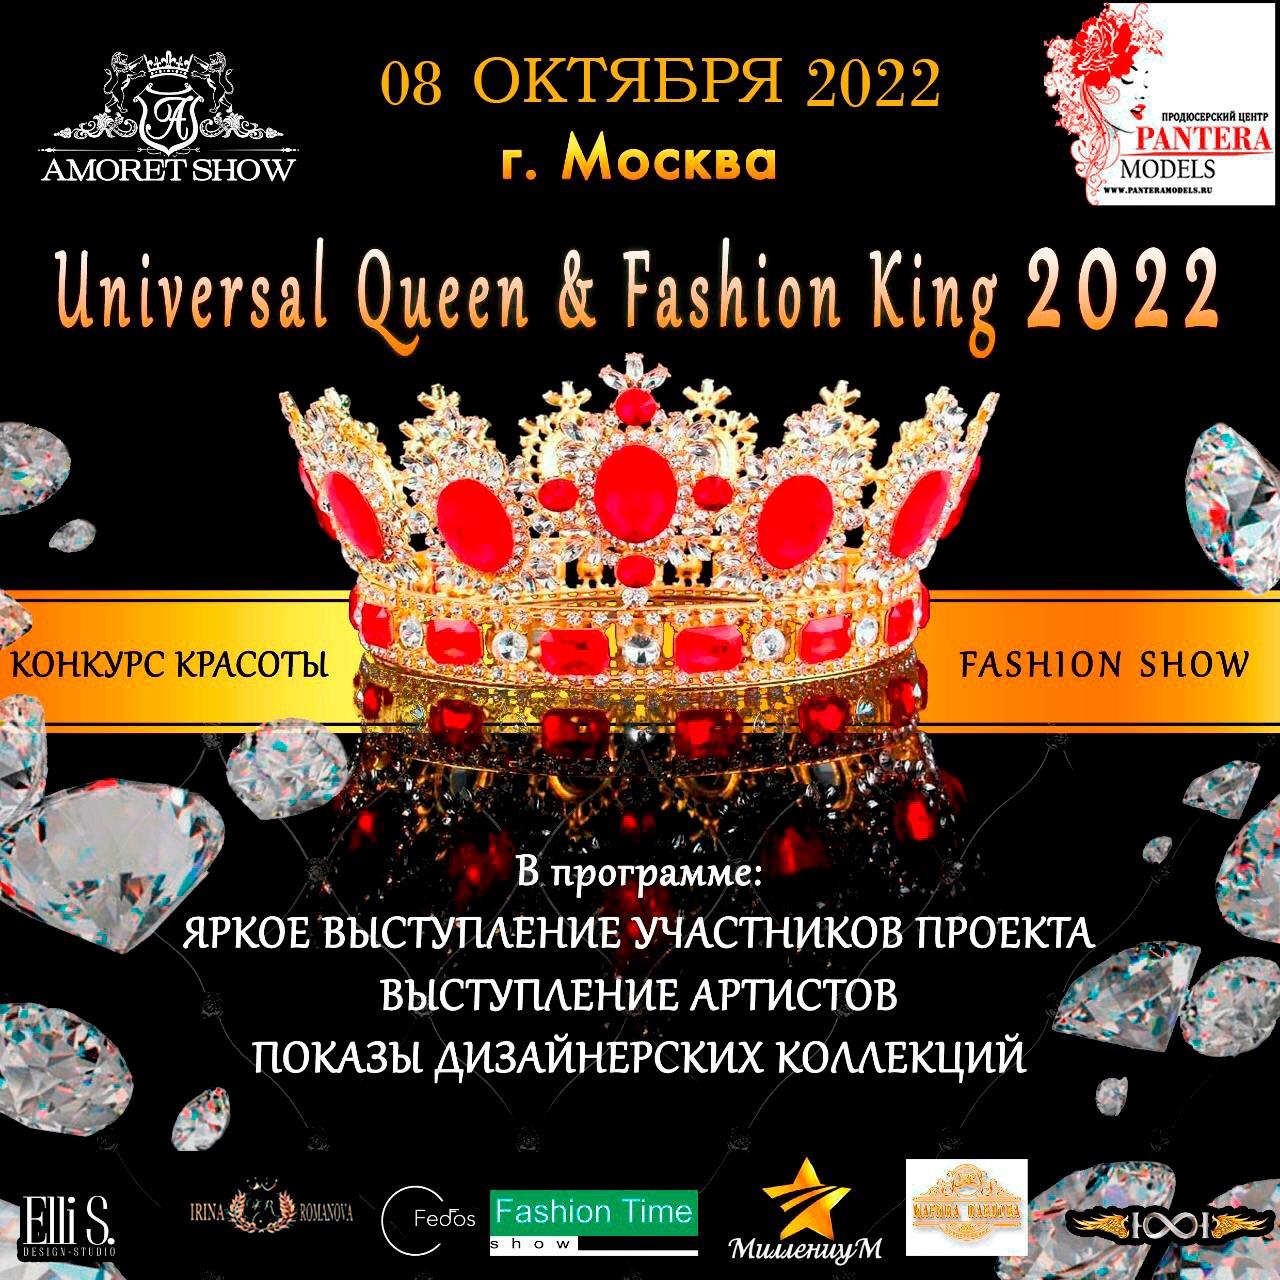 Конкурс красоты. Fashion show. "Universal Queen & Fashion King 2022" Финал 08 октября 2022, г. Москва 